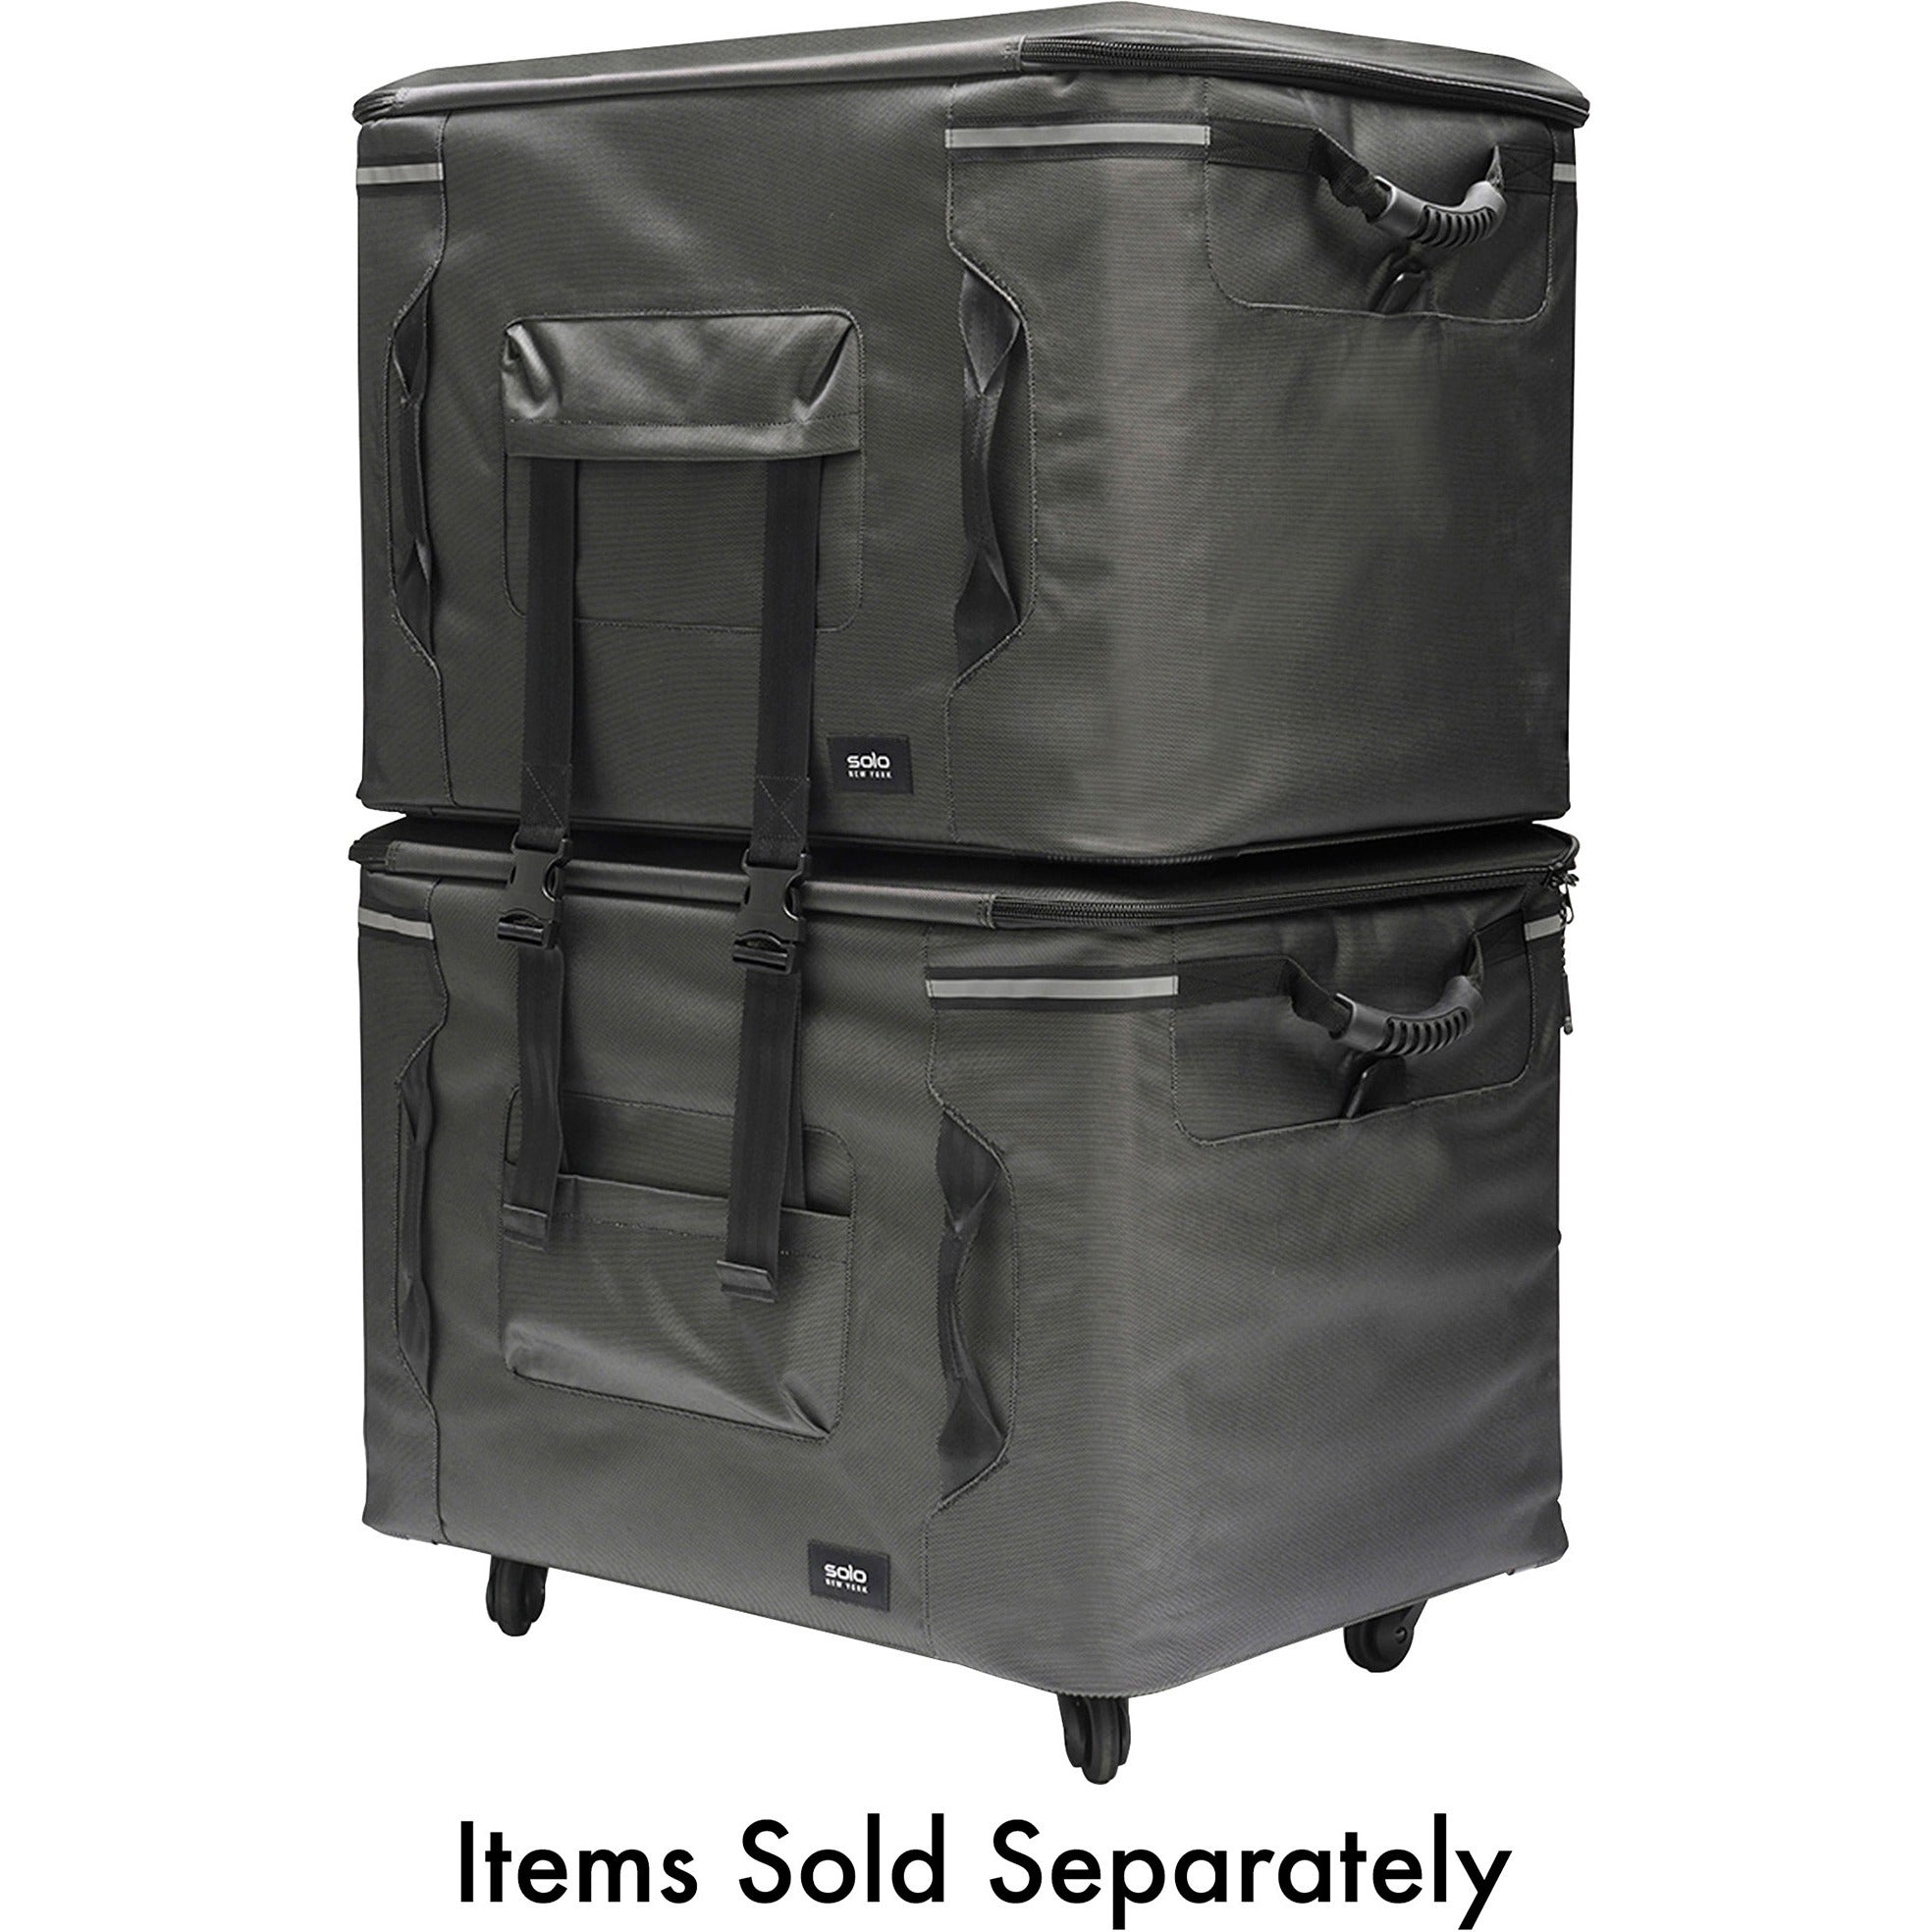 solo-pro-transporter-128-roller-travel-luggage-bottom-case-box-1-of-2-black-205-x-26-x-1875-bump-resistant-black-luggage-128l-volume-capacity-1-pack_uslssc11110 - 3